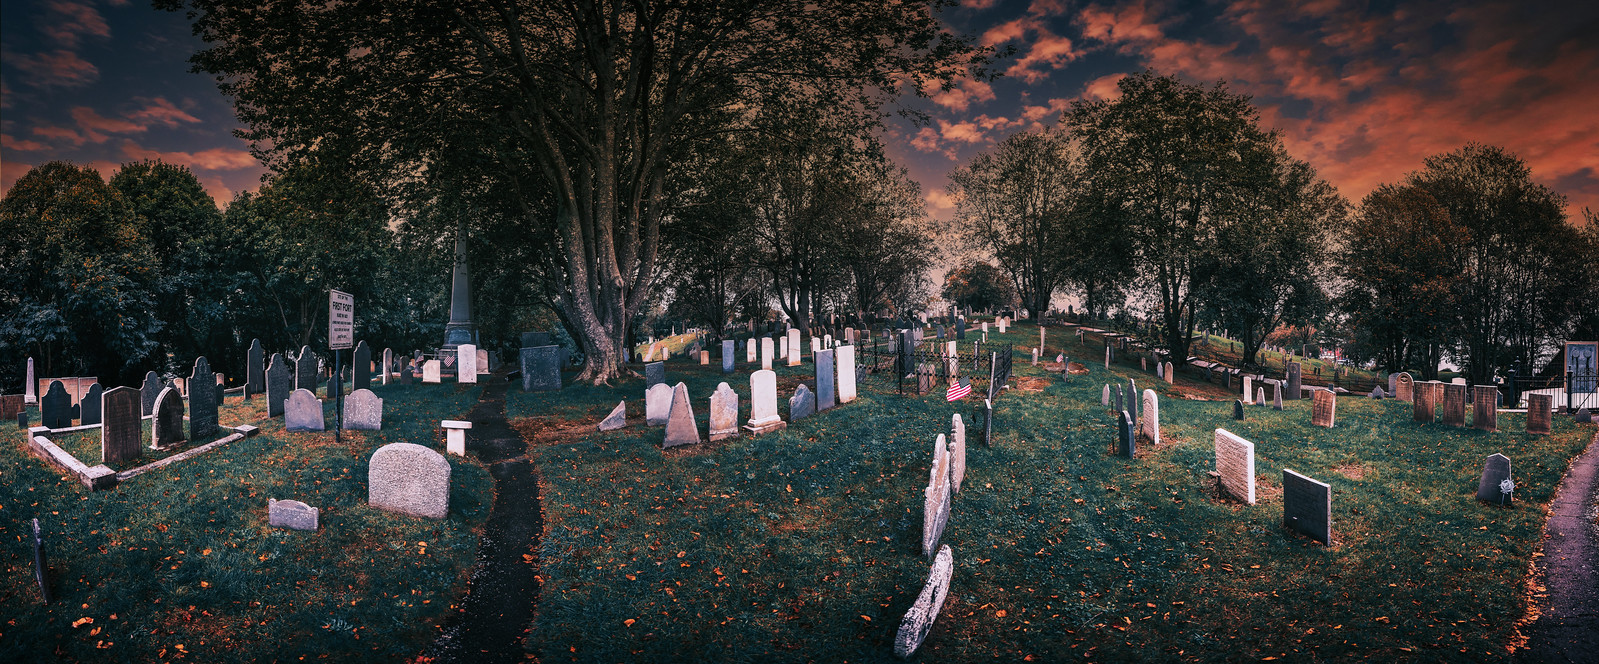 A graveyard at twilight.